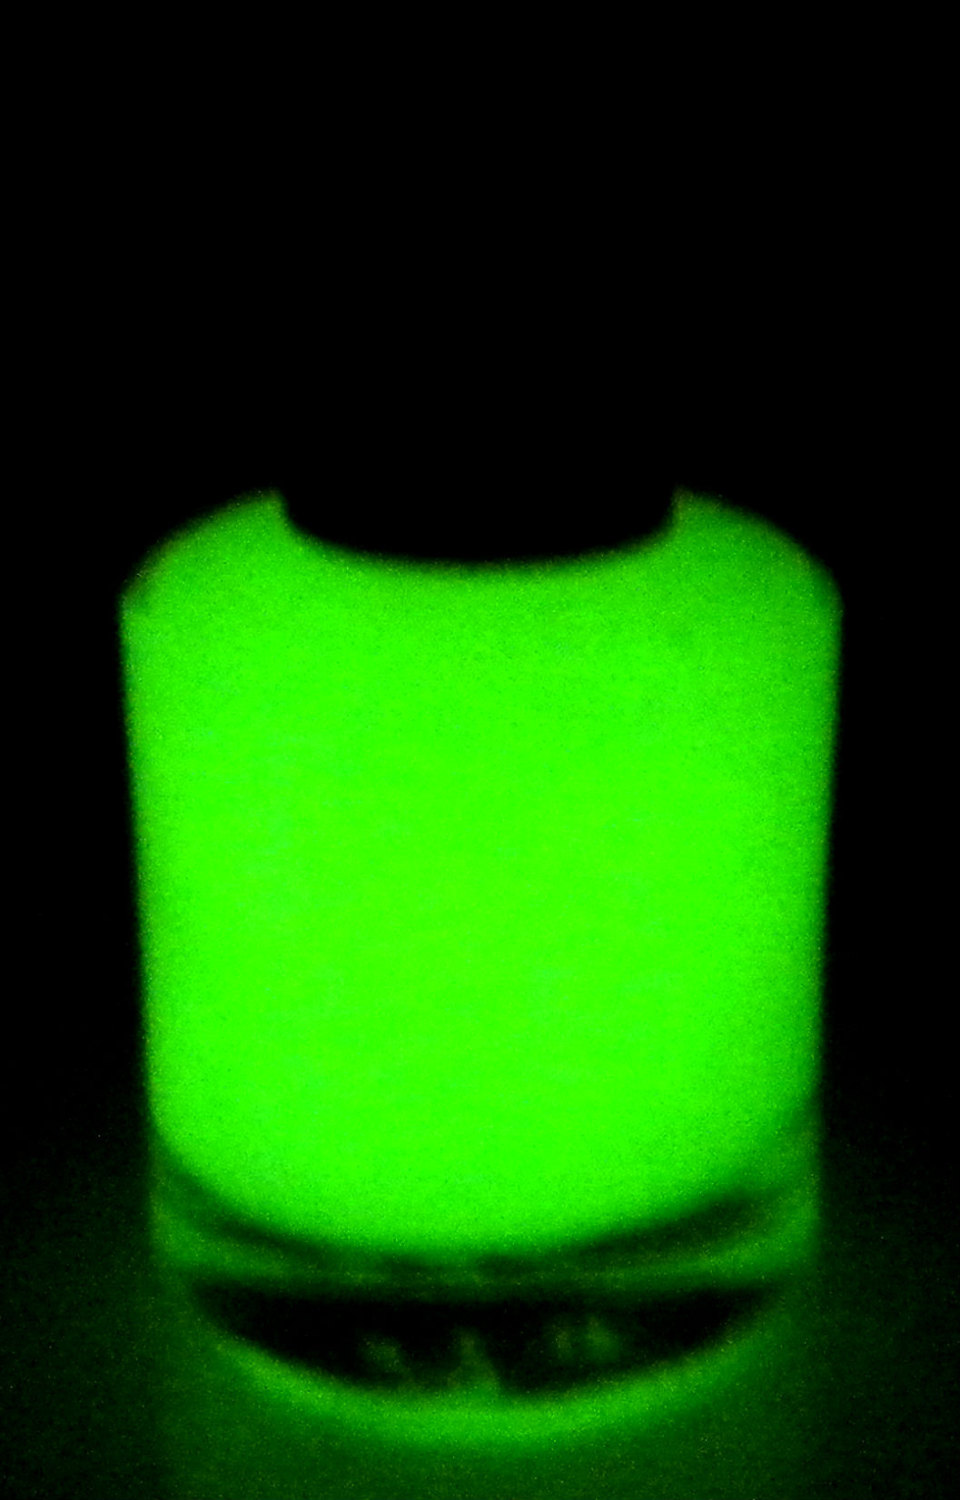 Glow-in-the-dark Nail Polish - Light Green - Venus - Custom Blended Nail Polish/lacquer - Regular Full Sized Bottle (15 Ml Size)